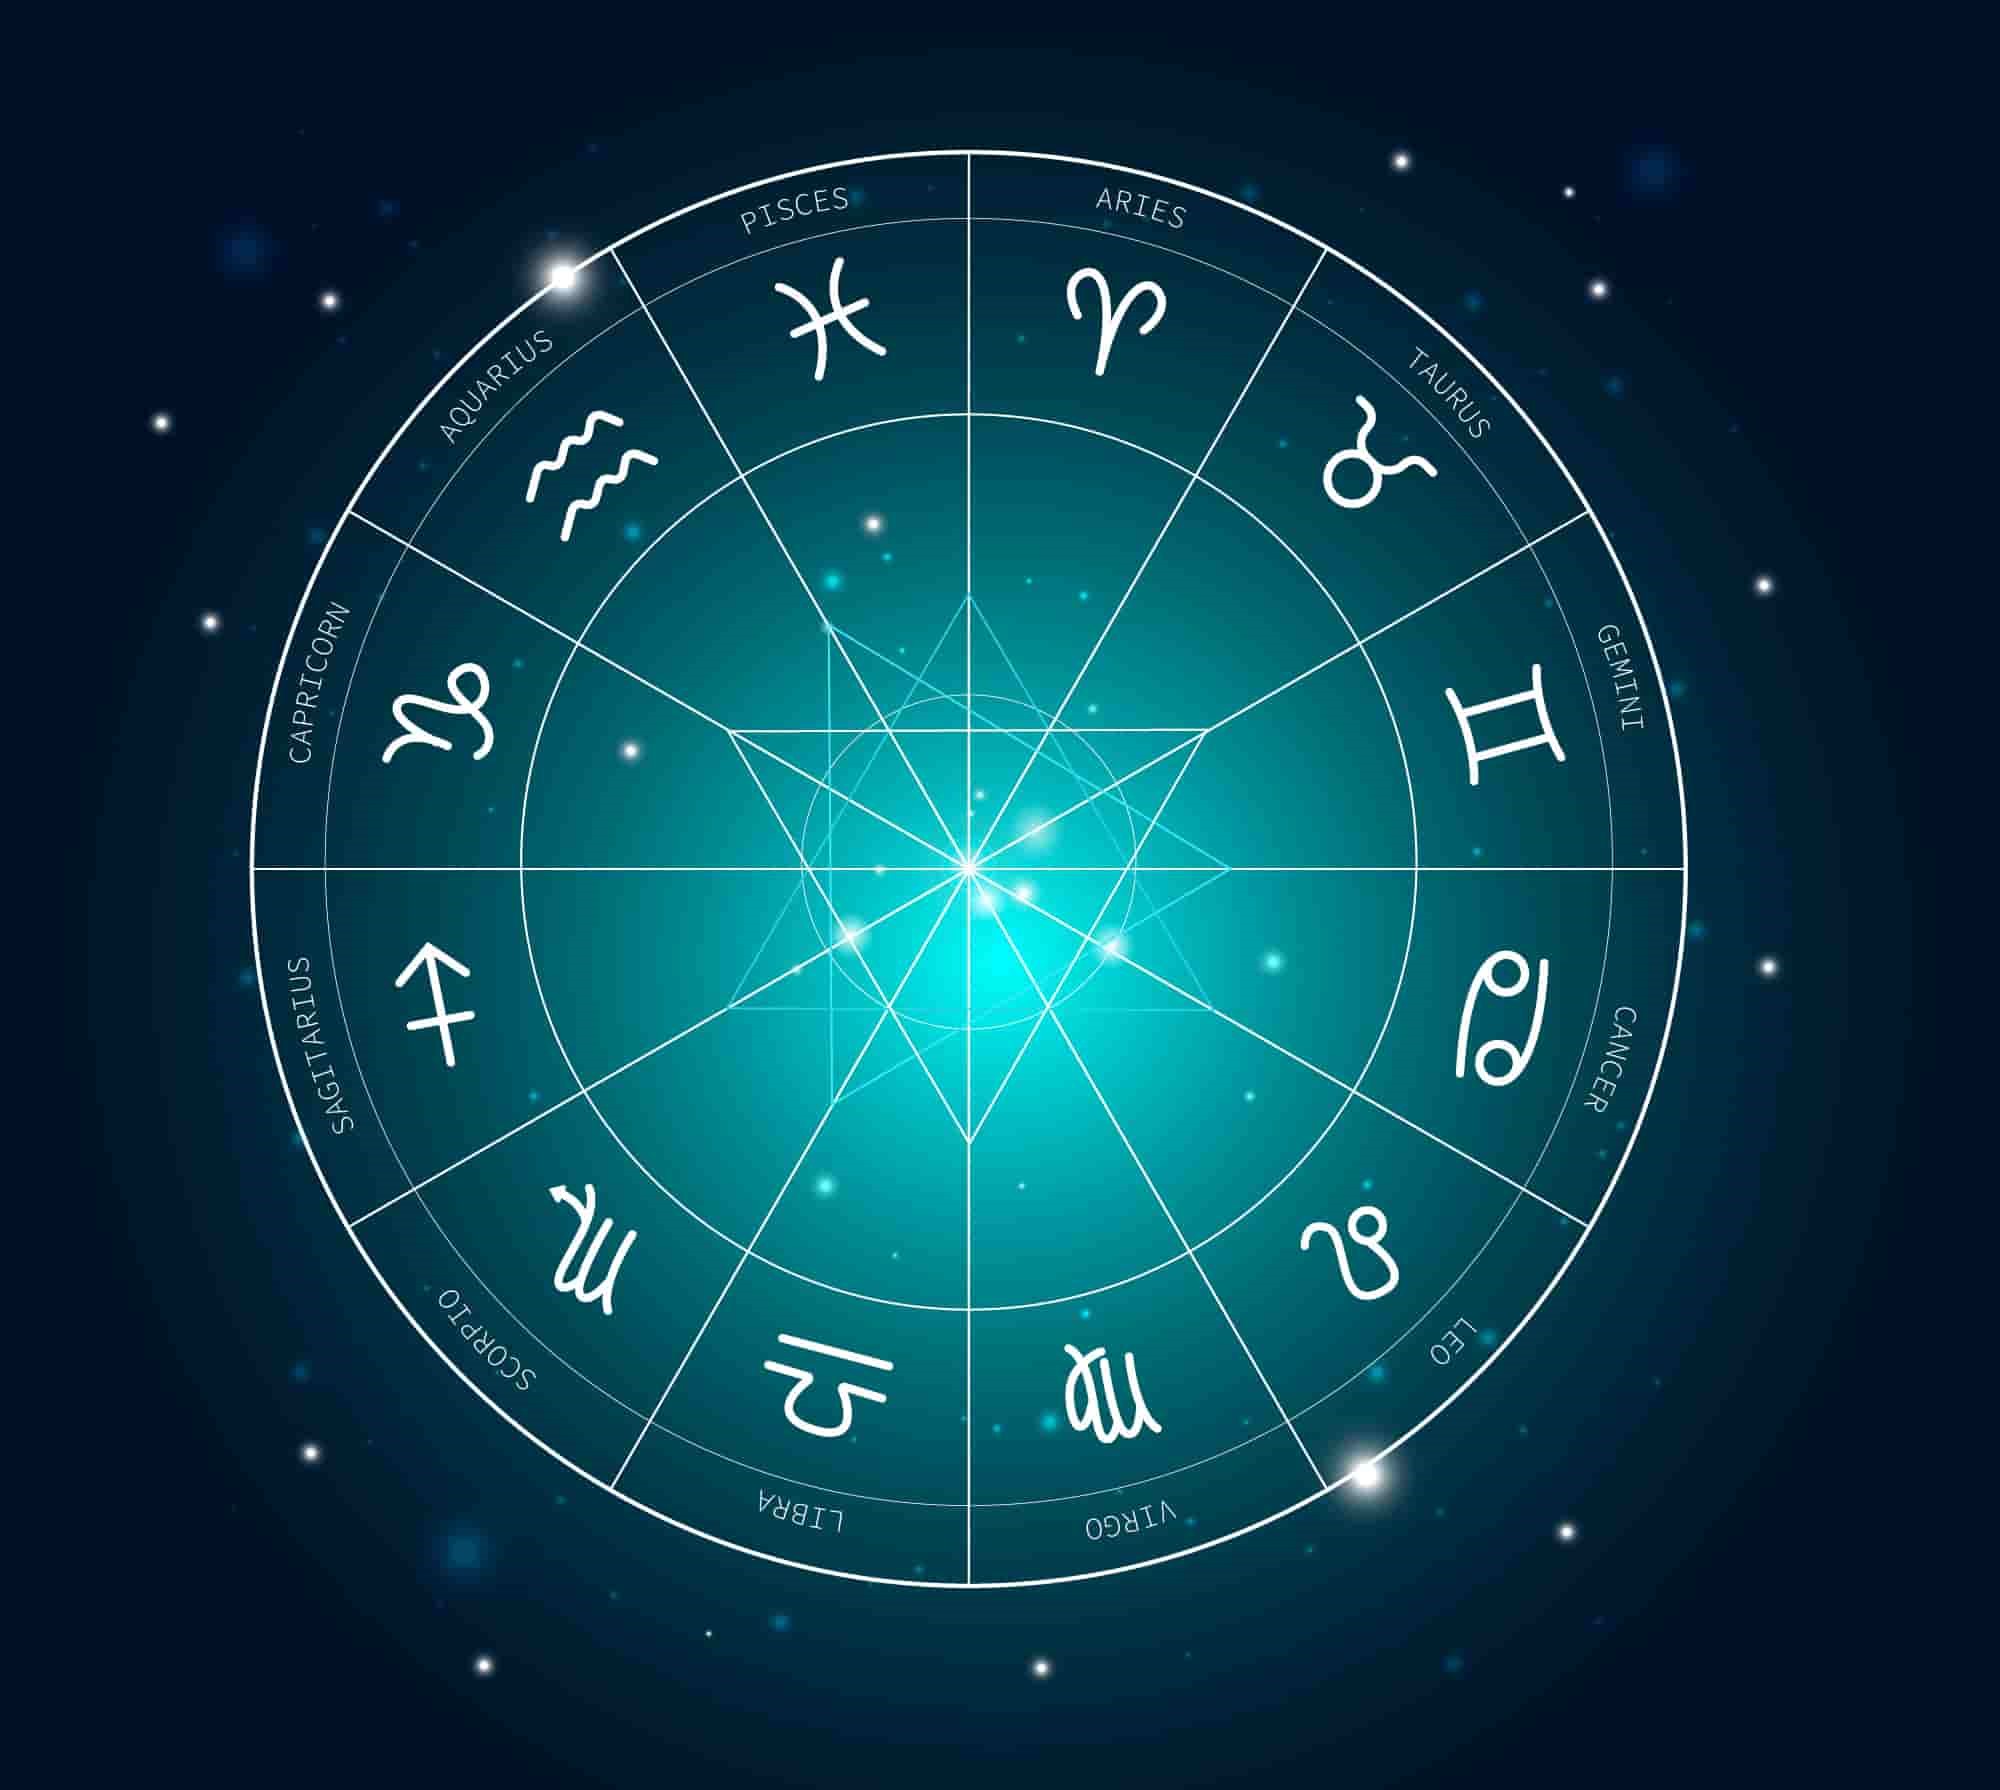 Ask an Astrologer